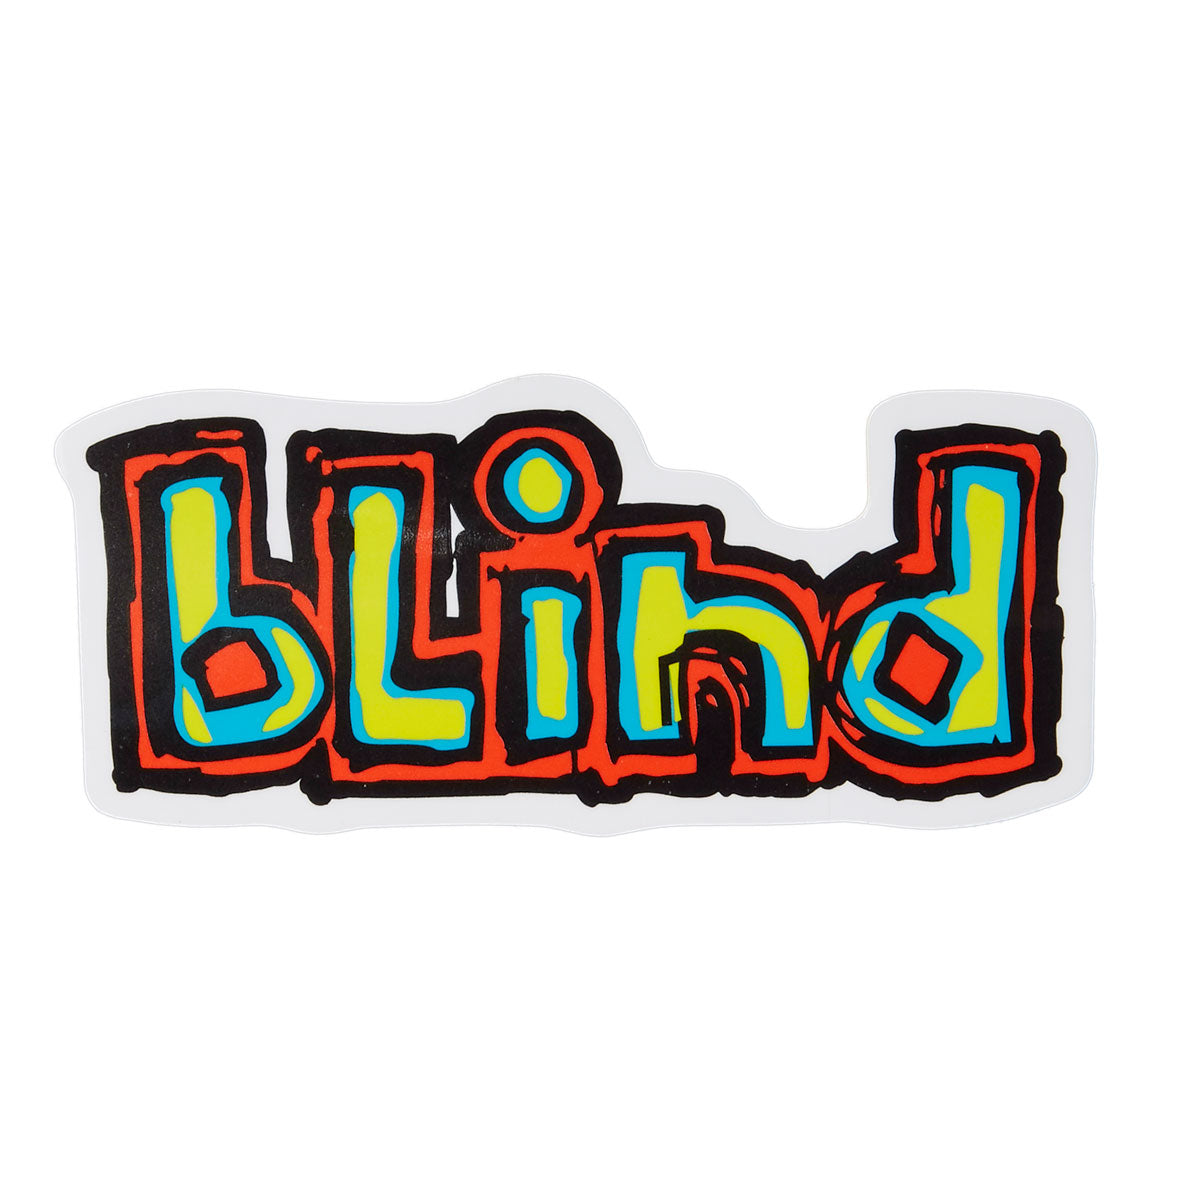 Blind Classic OG Stickers image 1